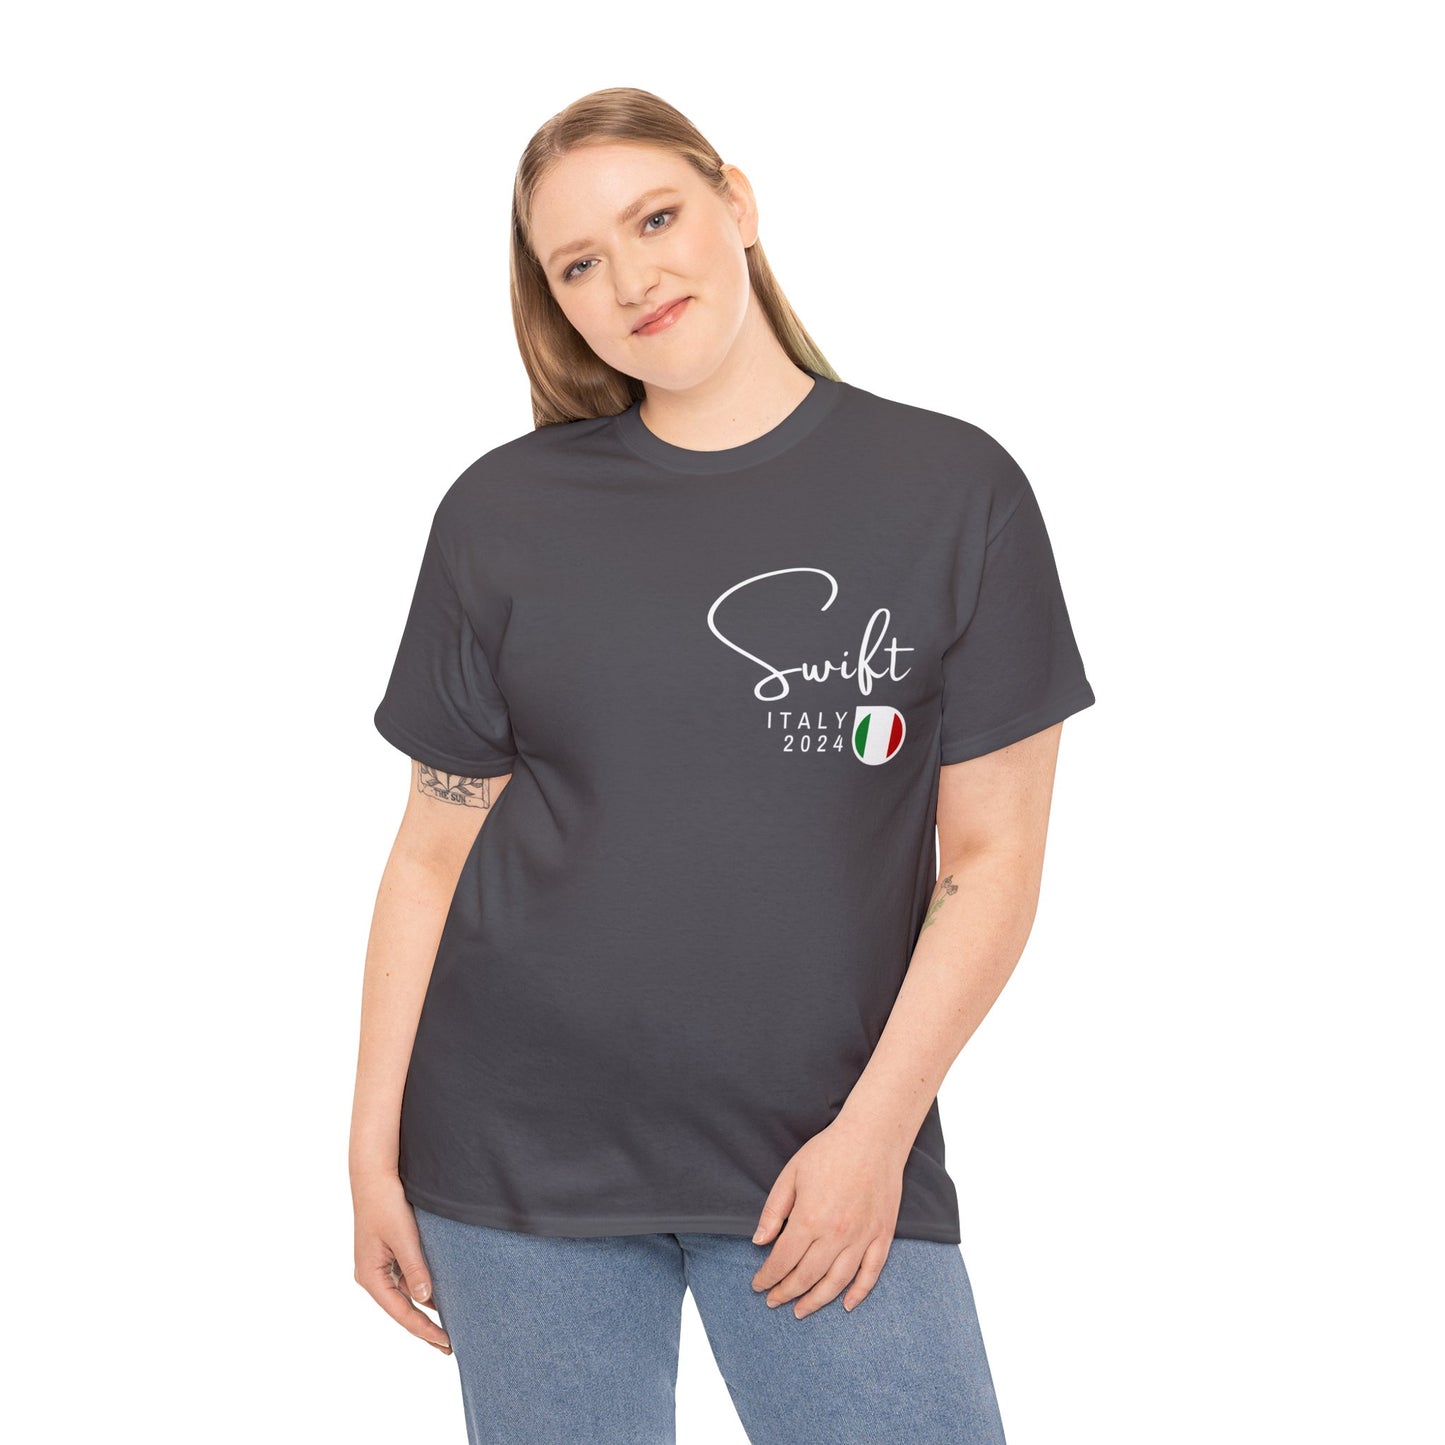 Swift Tour T-Shirt Italy Concert Tee